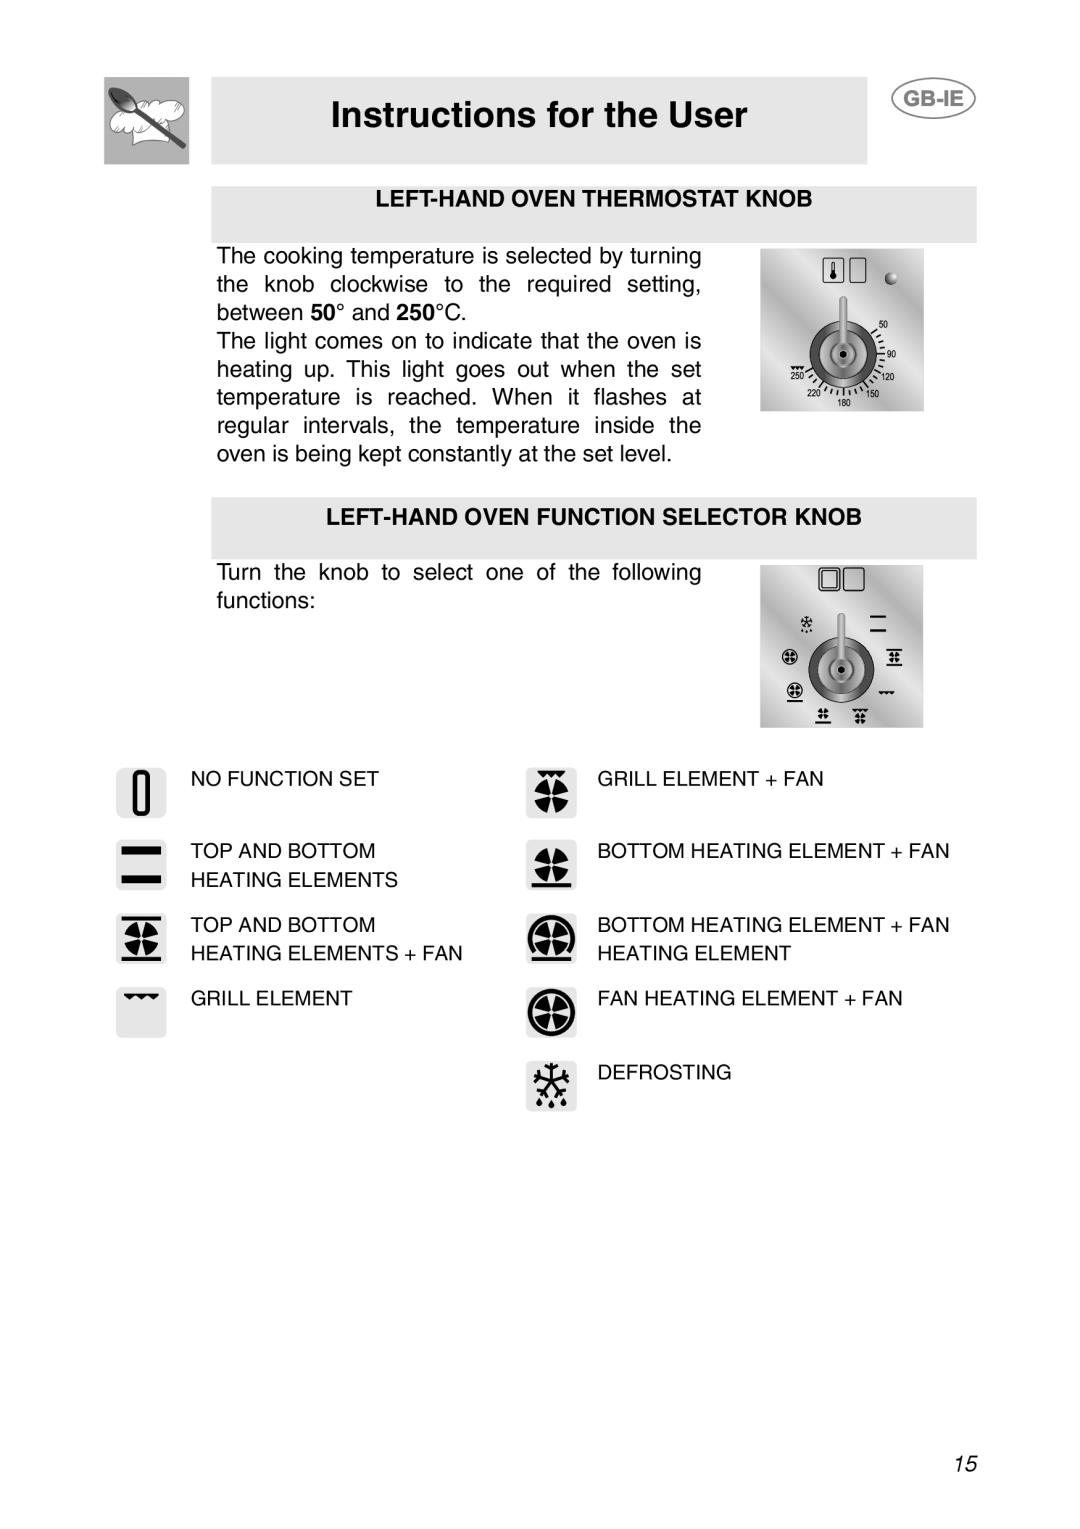 Smeg CS150SA manual Instructions for the User, Left-Handoven Thermostat Knob, Left-Handoven Function Selector Knob 